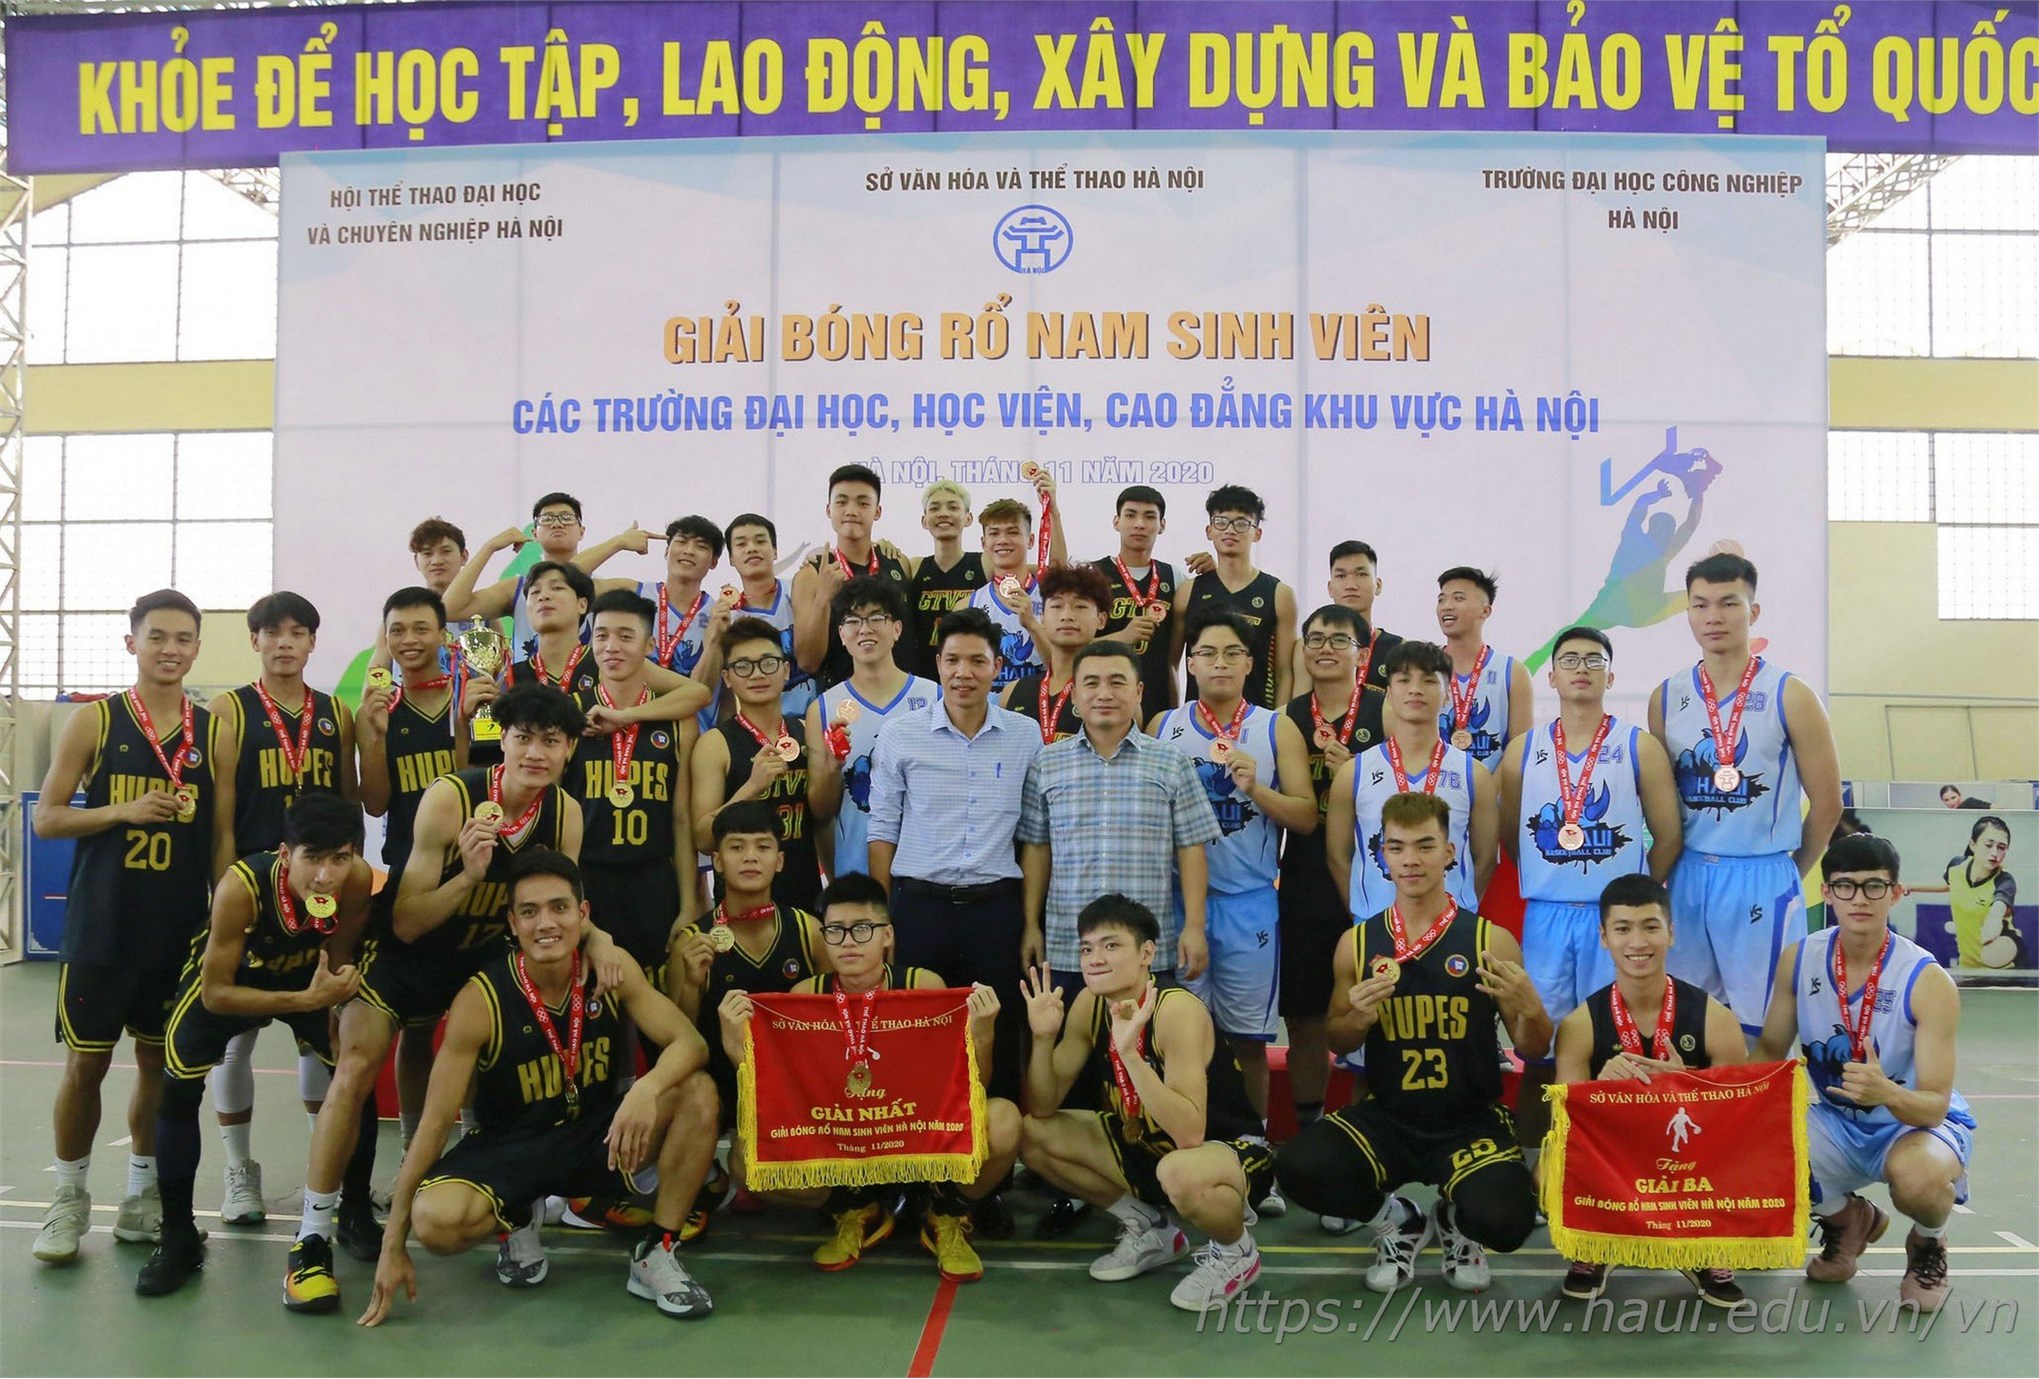 HaUI ranks third in Hanoi Men's Basketball League 2020